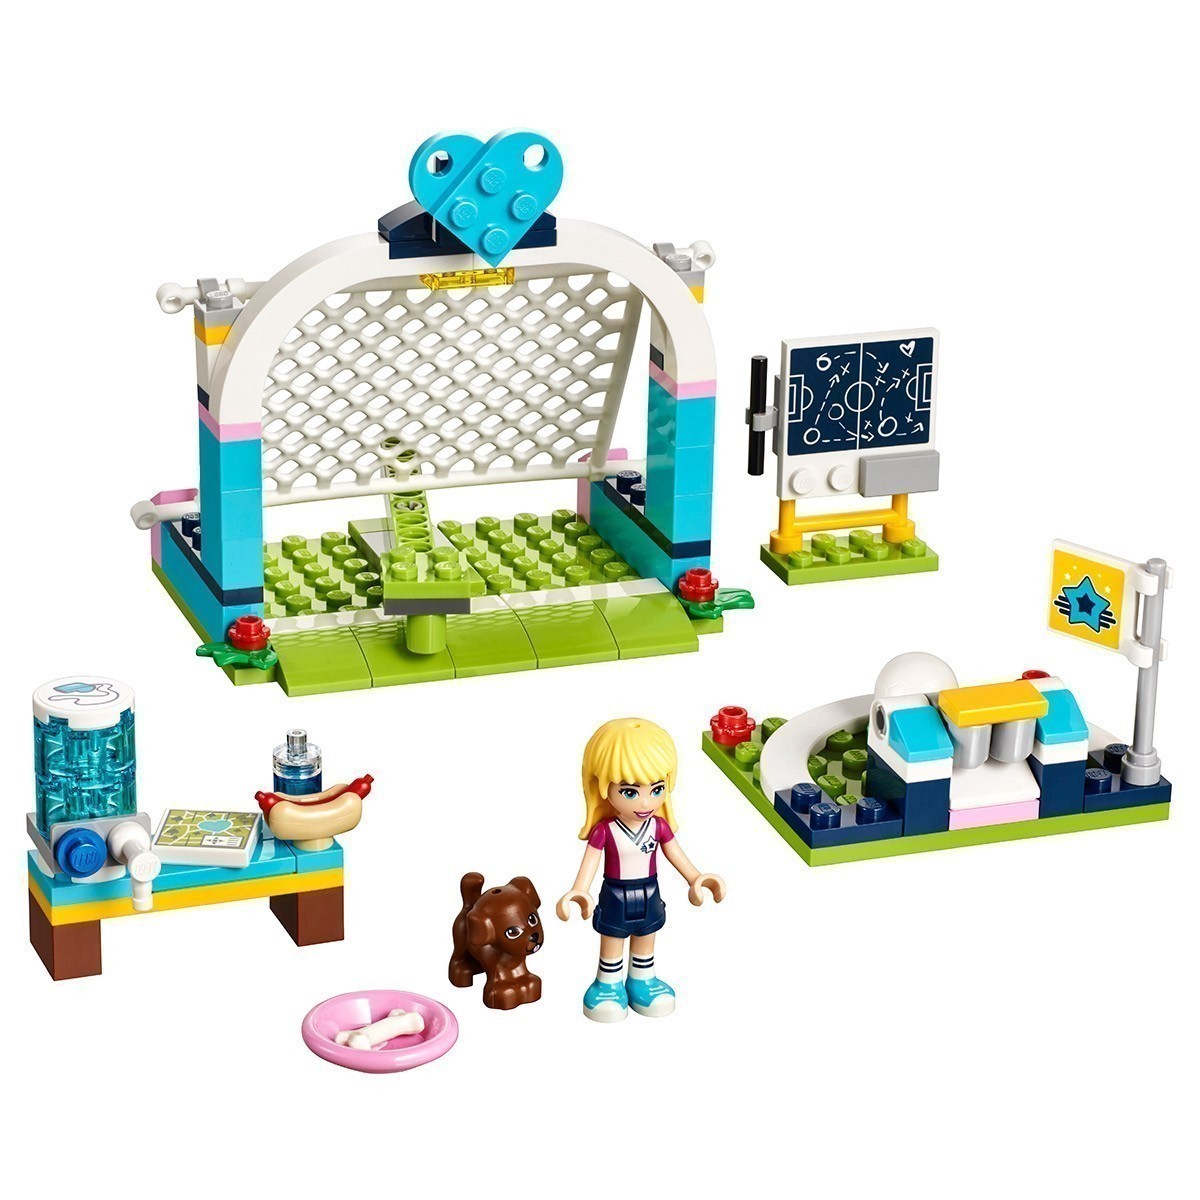 LEGO Friends 41330 - Stephanie's Soccer Practice